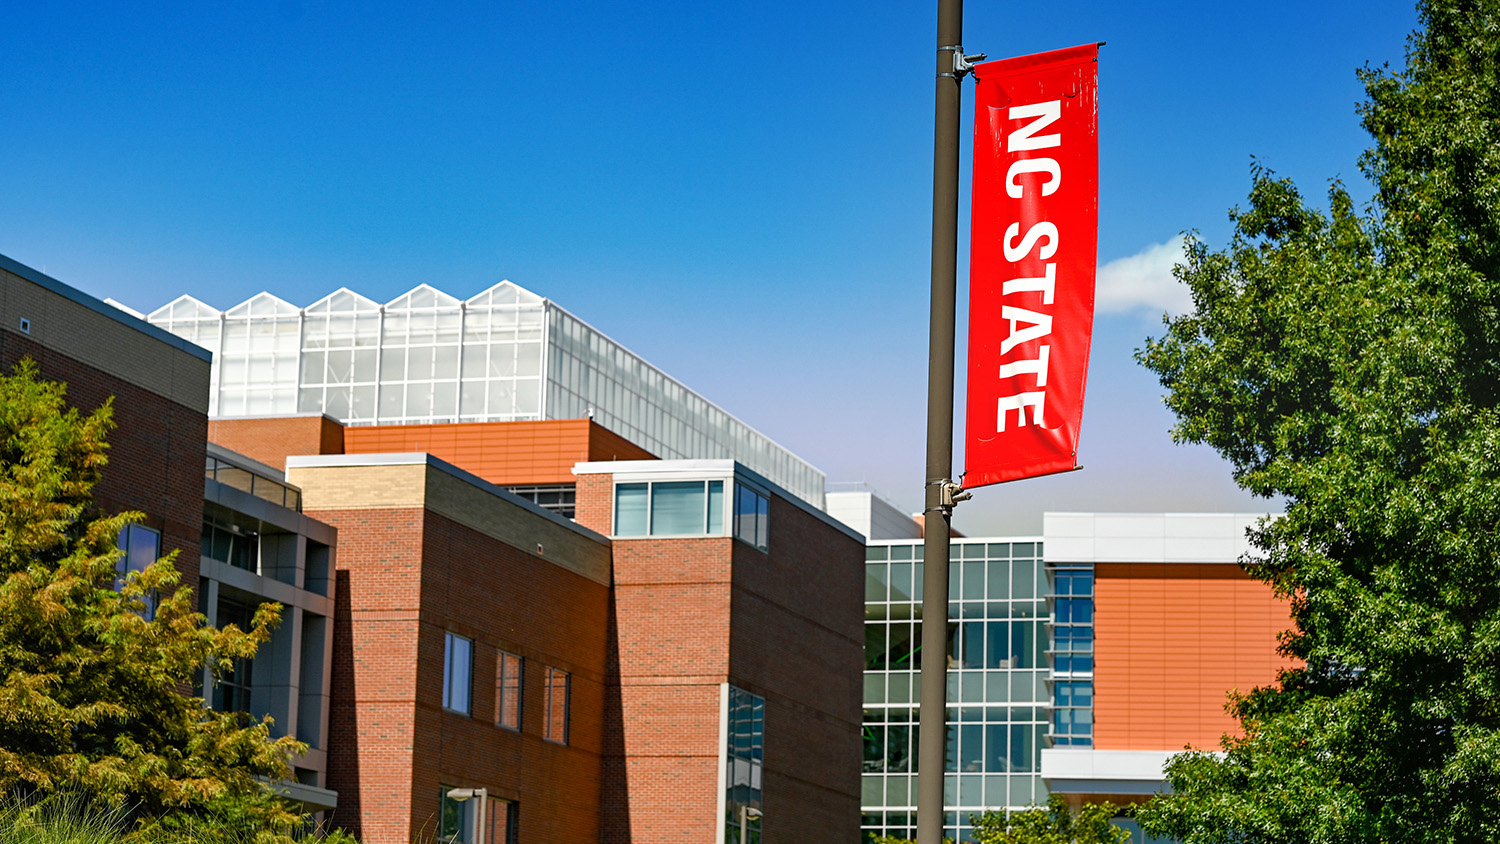 Campus photo displaying NC State banner.